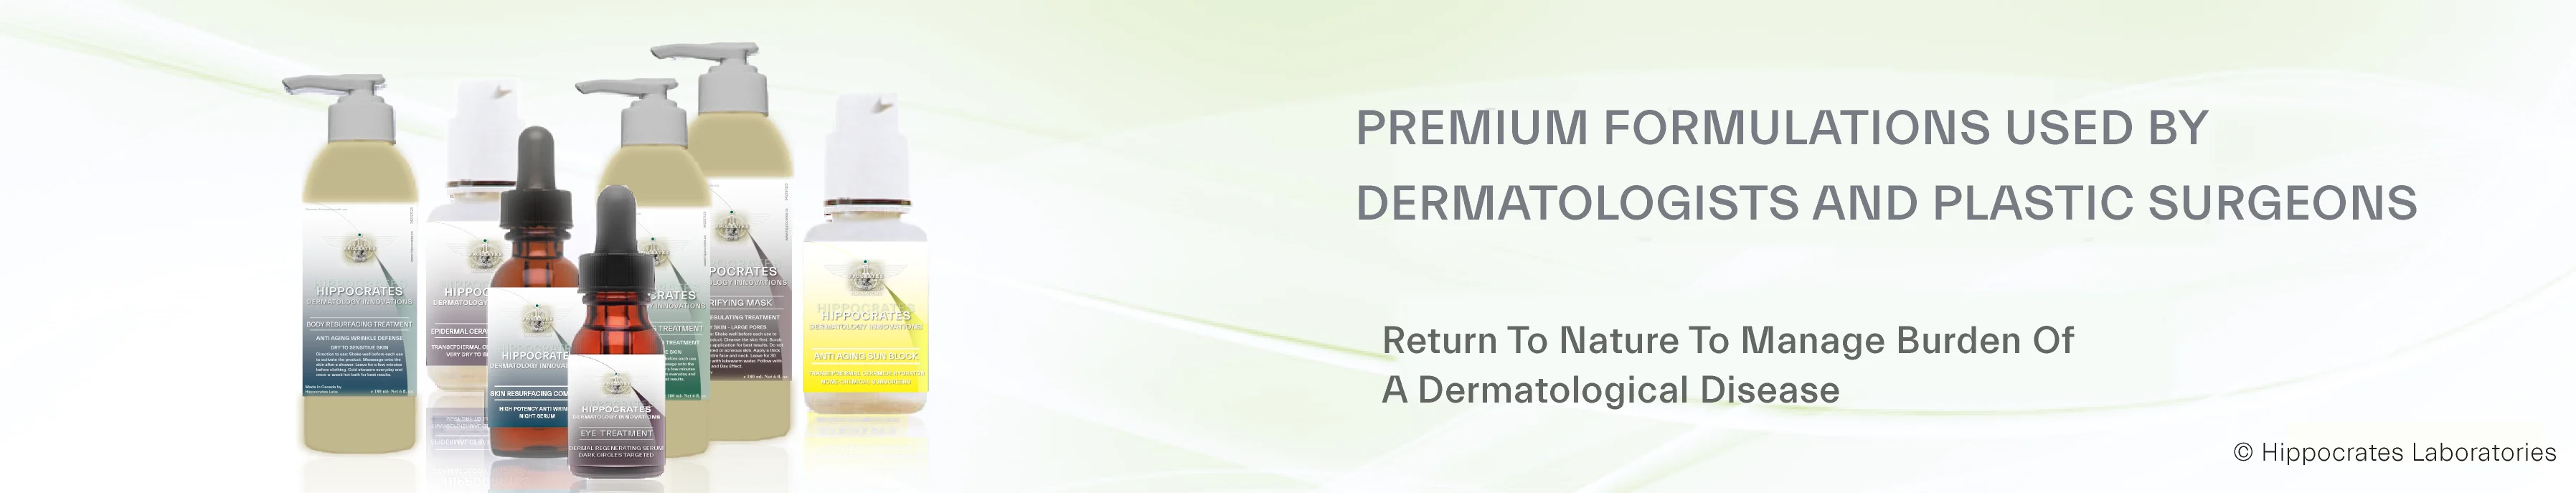 skin care for dermatological disease